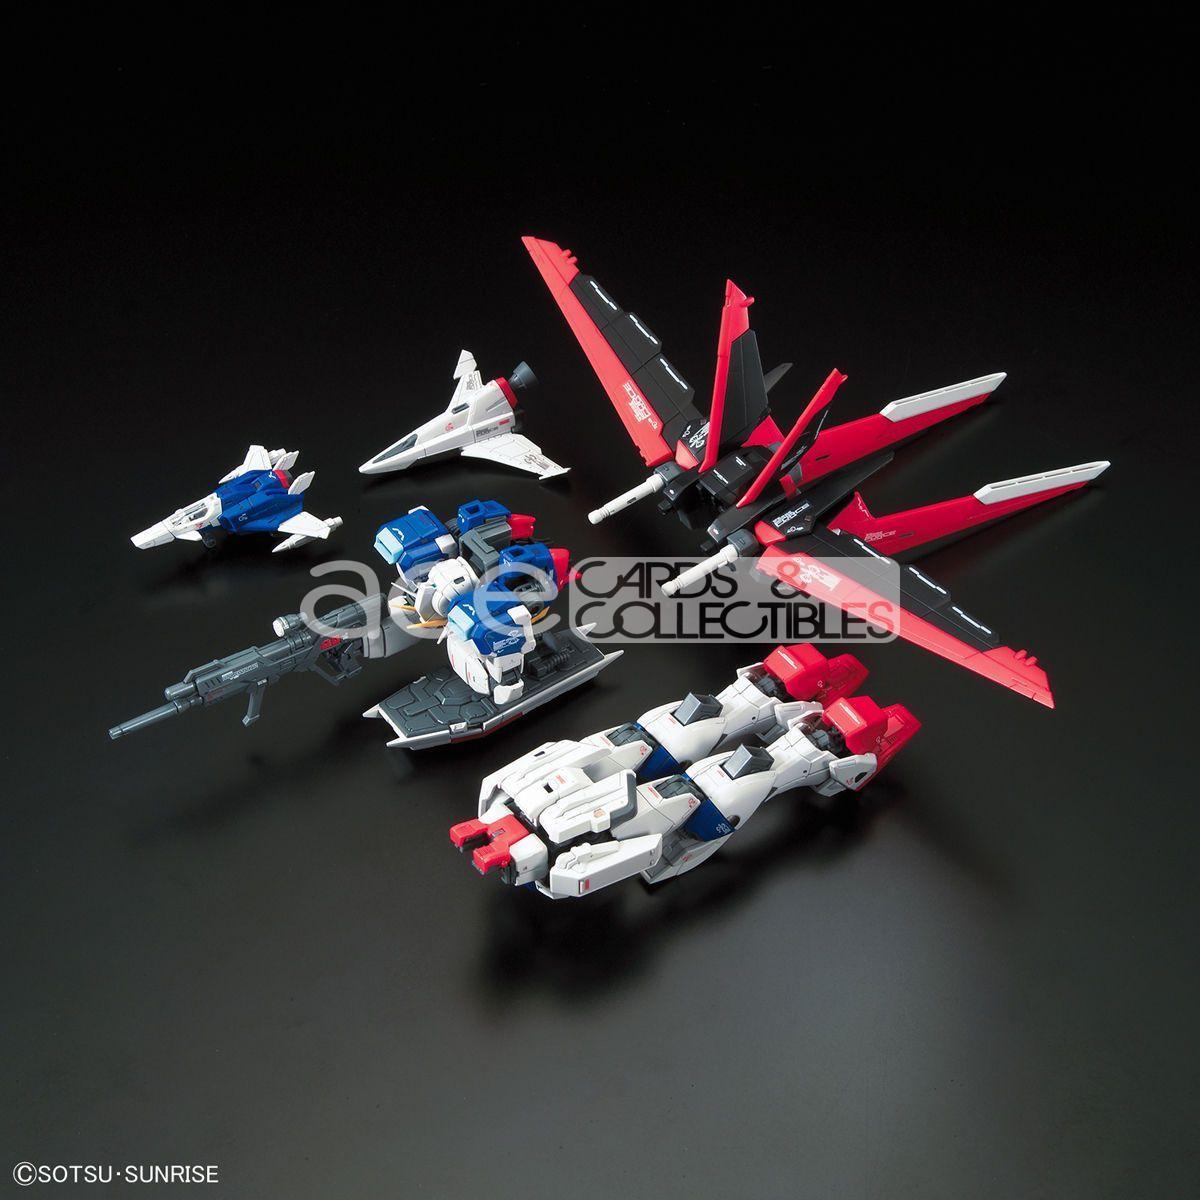 Gunpla RG 1/144 Force Impulse Gundam-Bandai-Ace Cards &amp; Collectibles